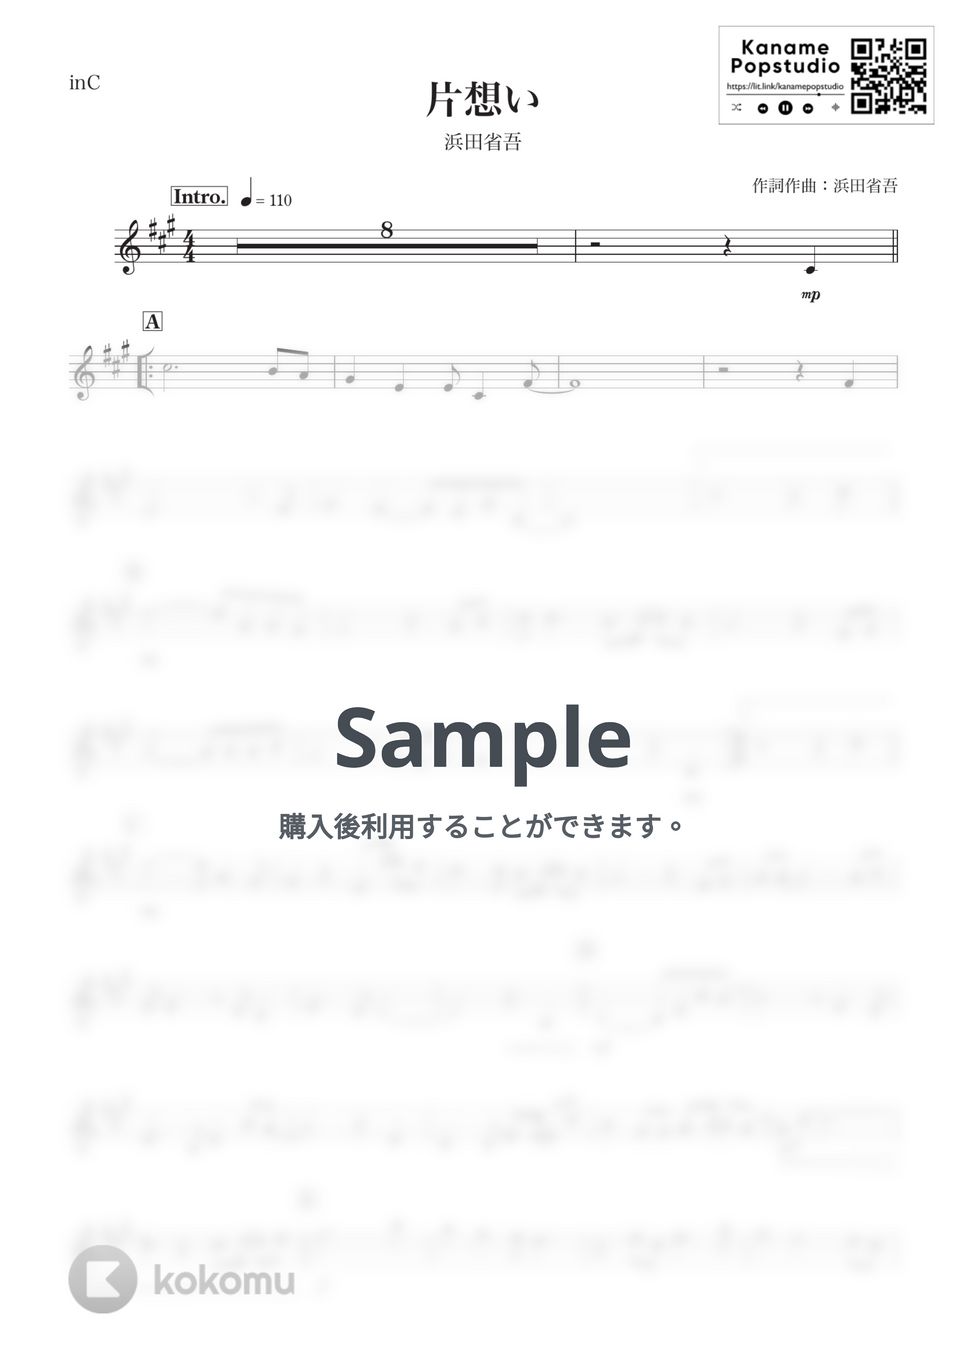 浜田省吾 - 片想い (C) by kanamusic